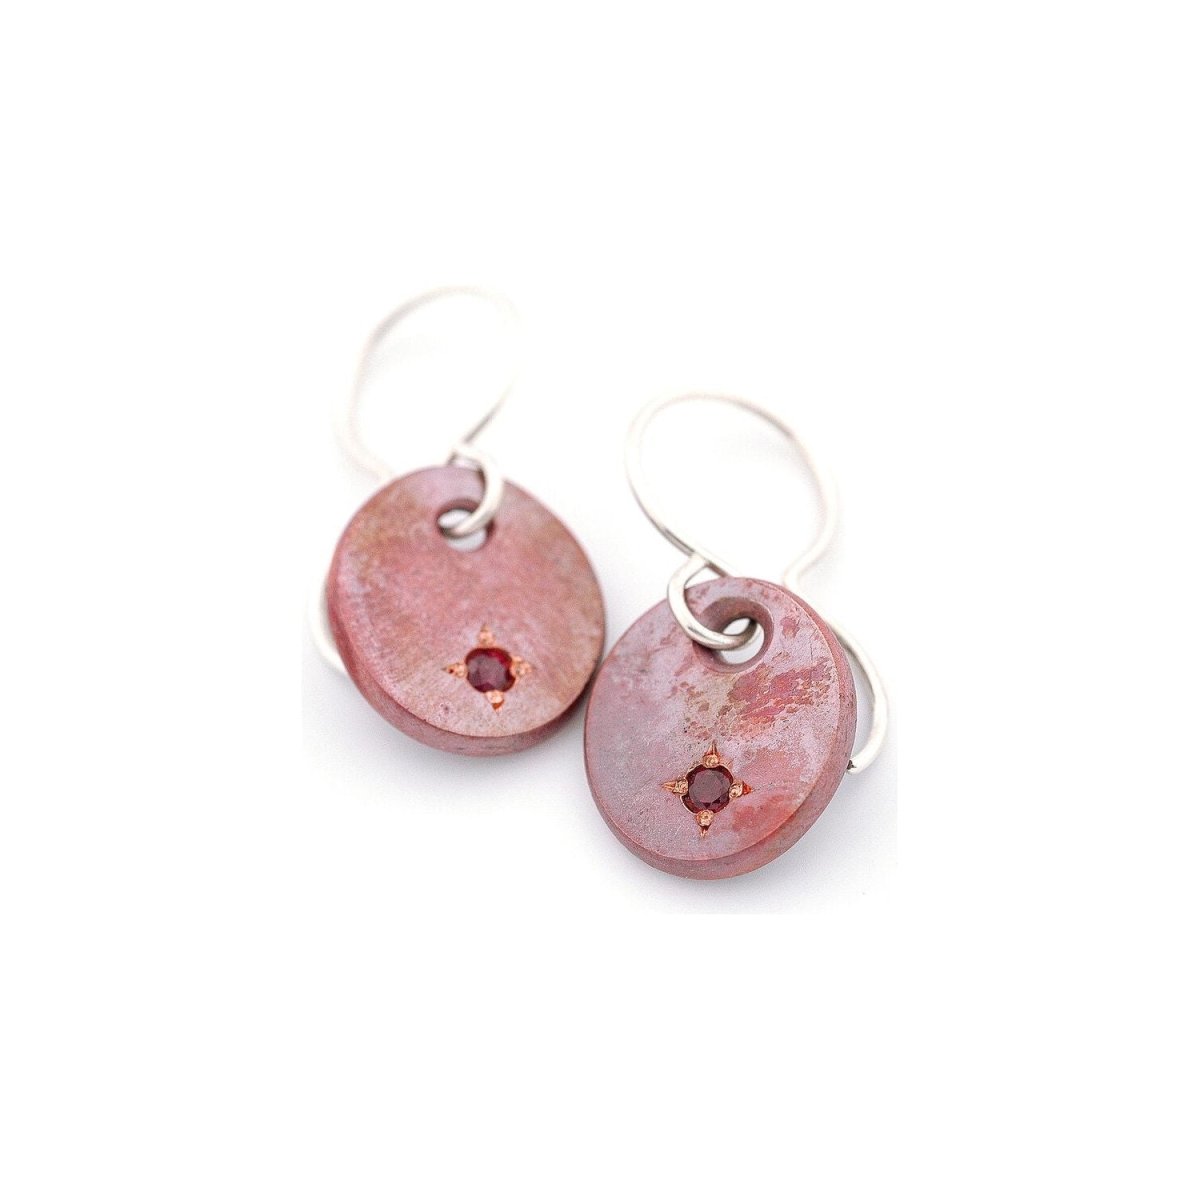 Copper Drop Earrings with Rubies - John Paul Designs